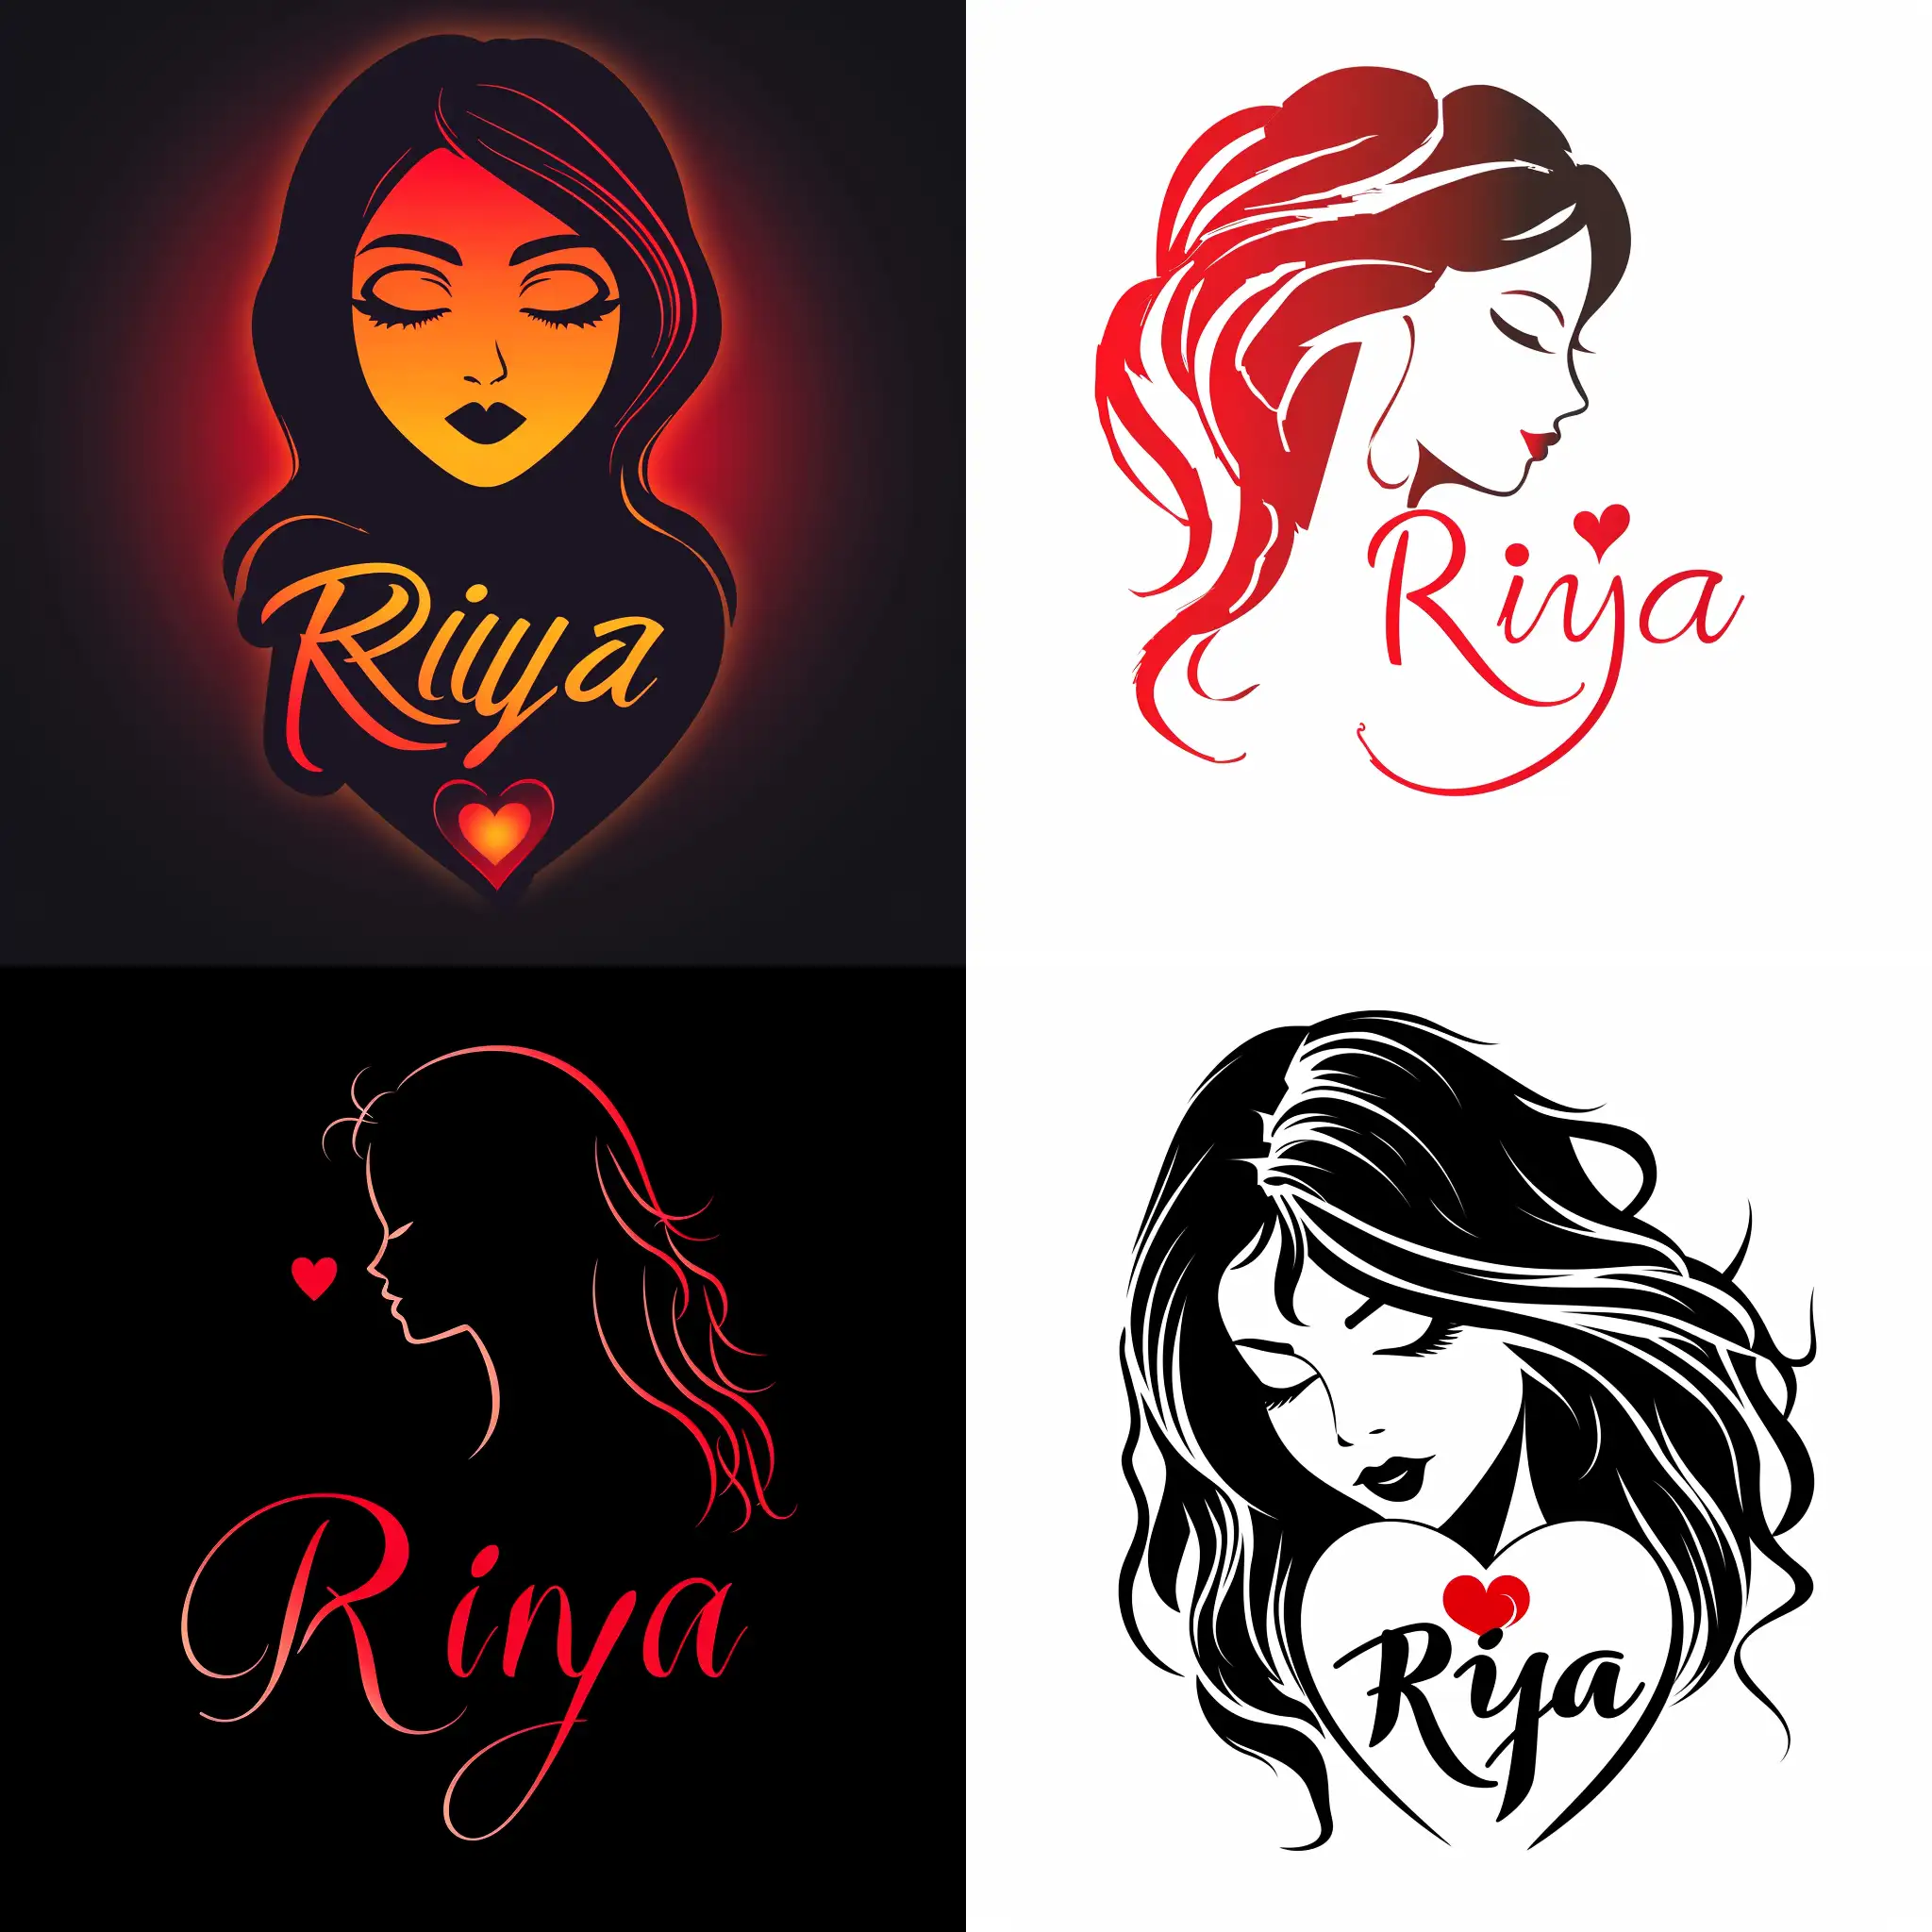 Angelic-Girl-Logo-Design-with-Heart-Shape-for-Riya